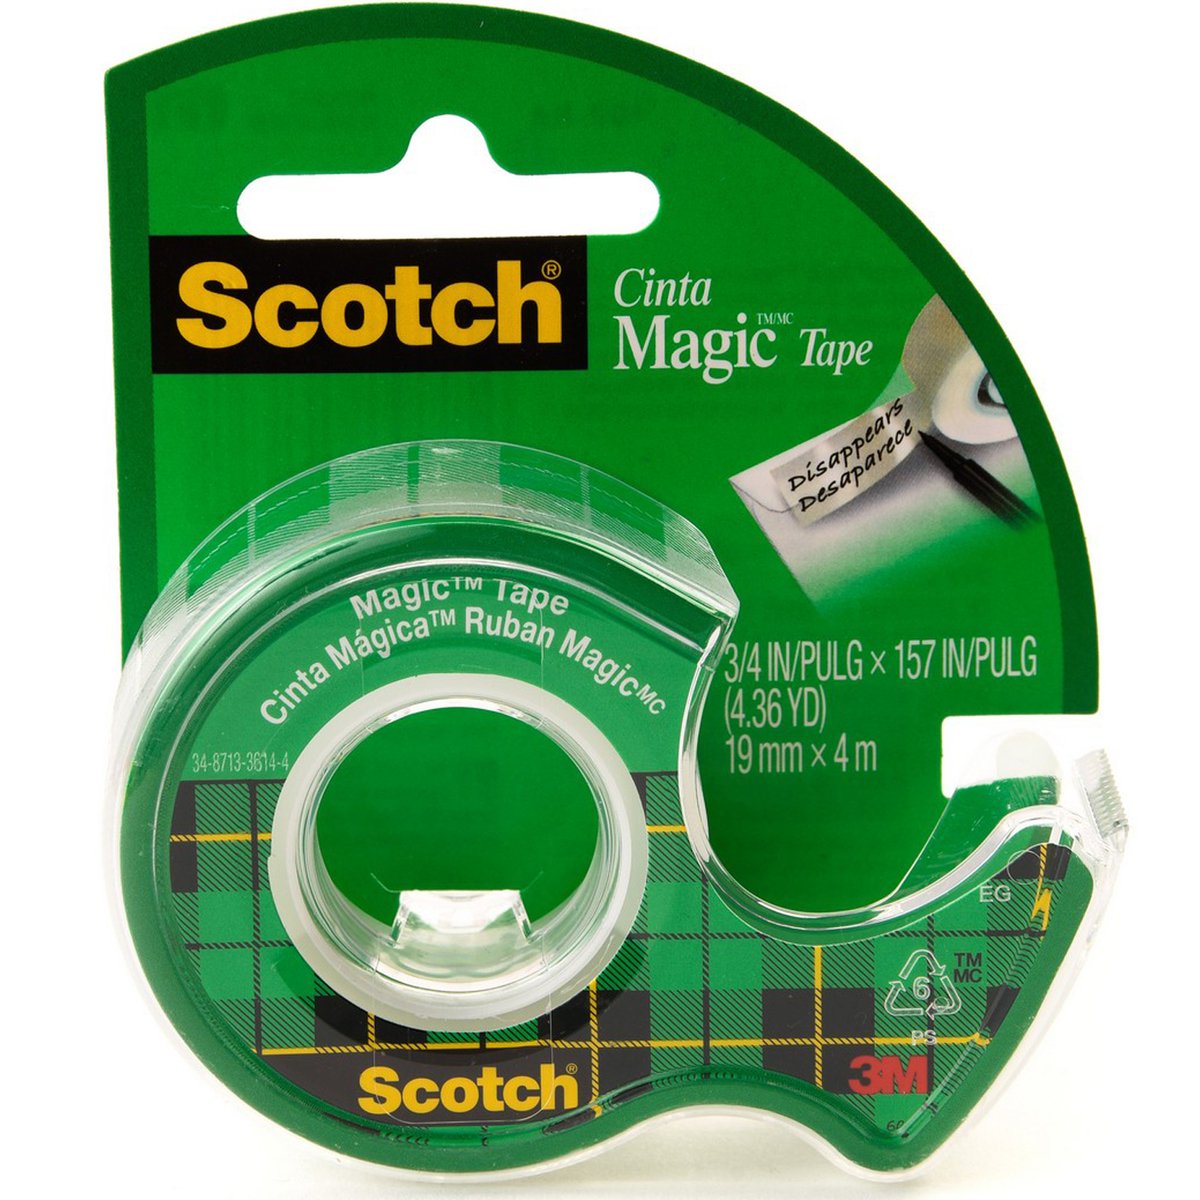 3M Scotch Magic Tape with Plastic Dispenser 19mm x 4m 1Pc